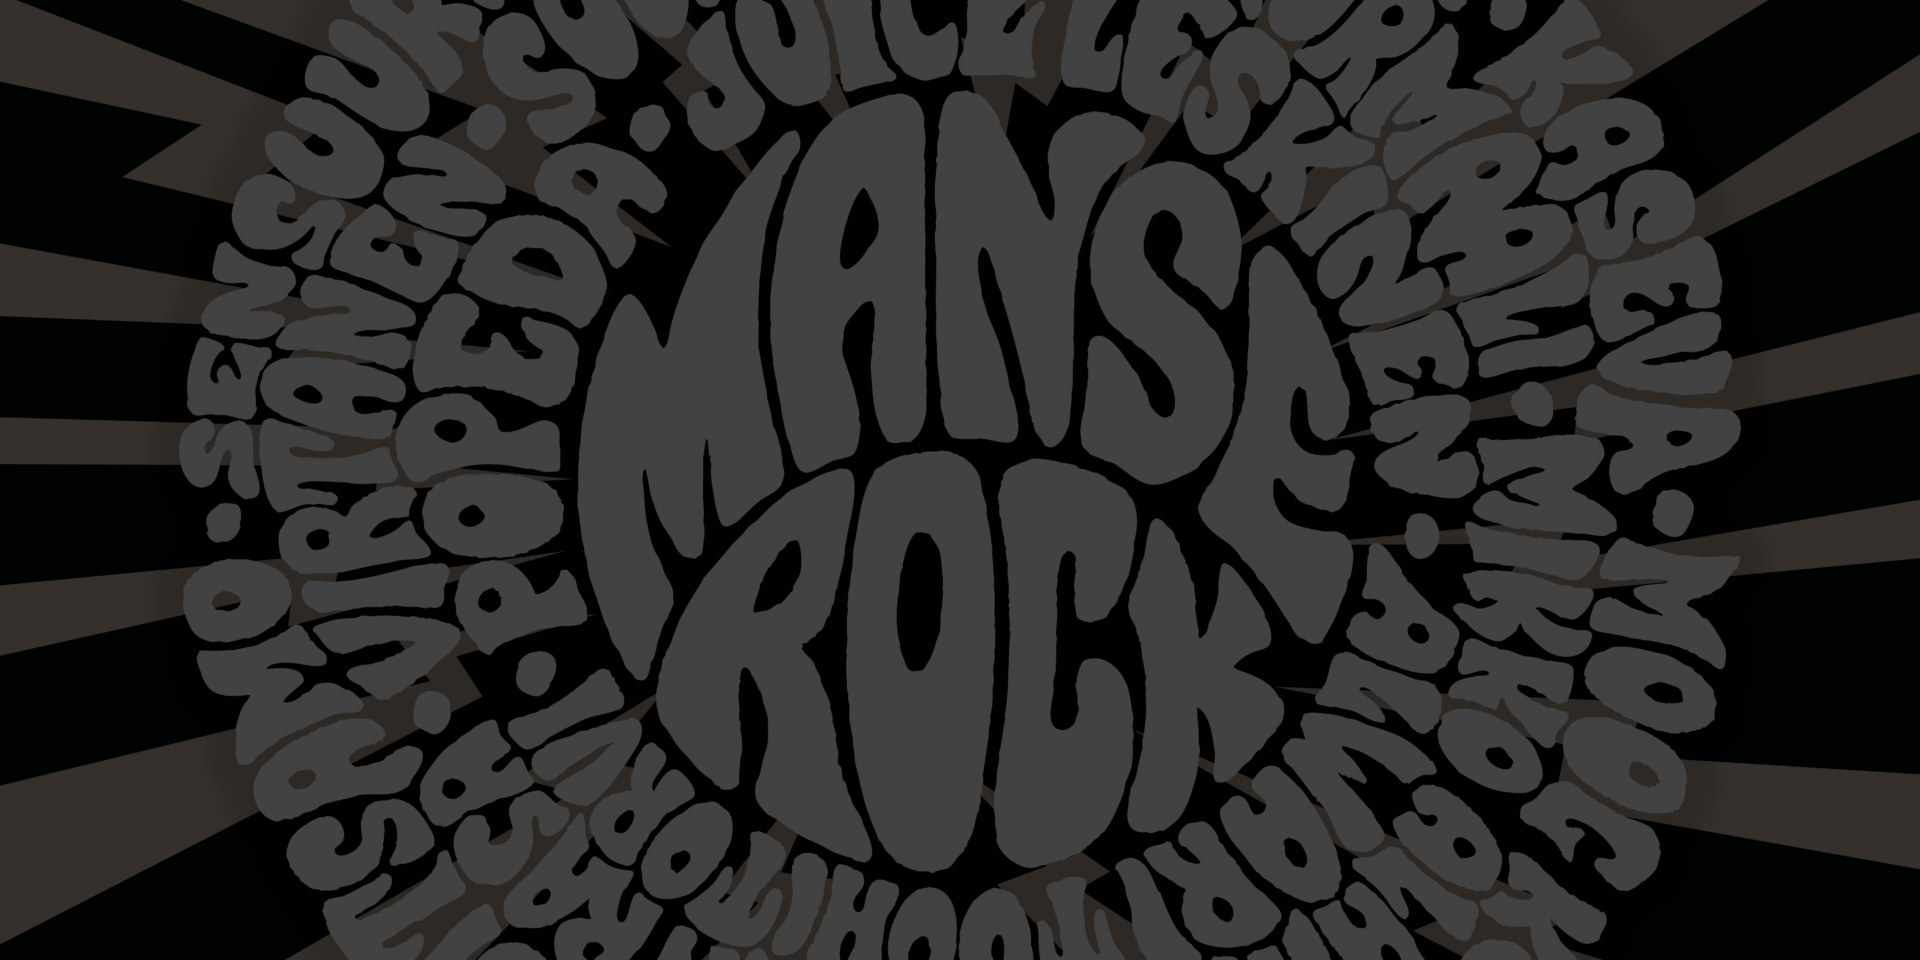 Manserock-logo mustalla pohjalla. Logossa ympyränmuodossa bändien nimiä.